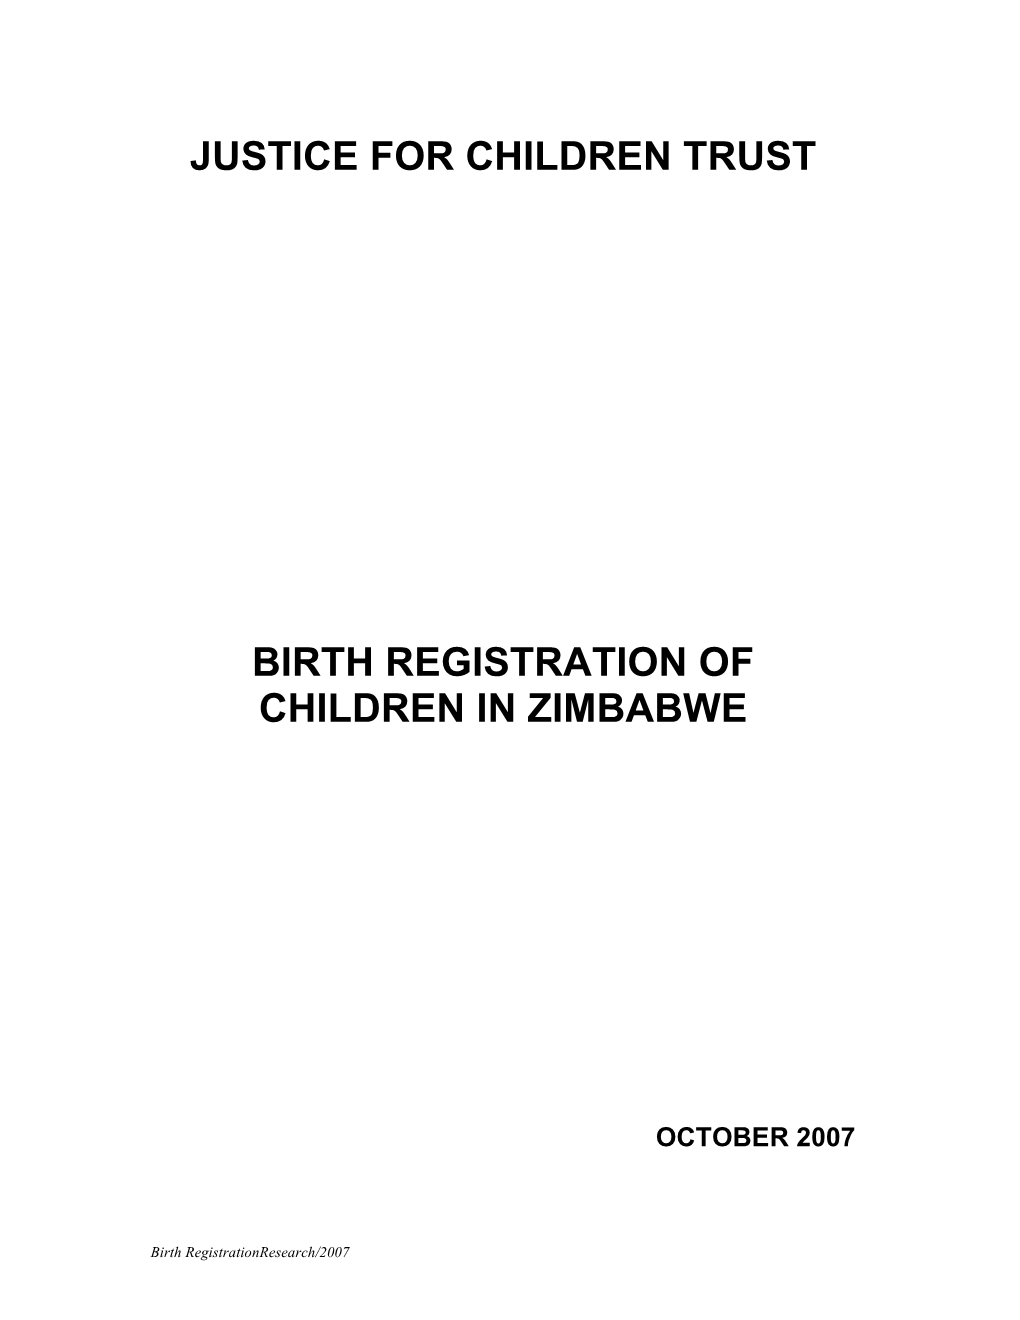 Justice for Children Trust Birth Registration Of